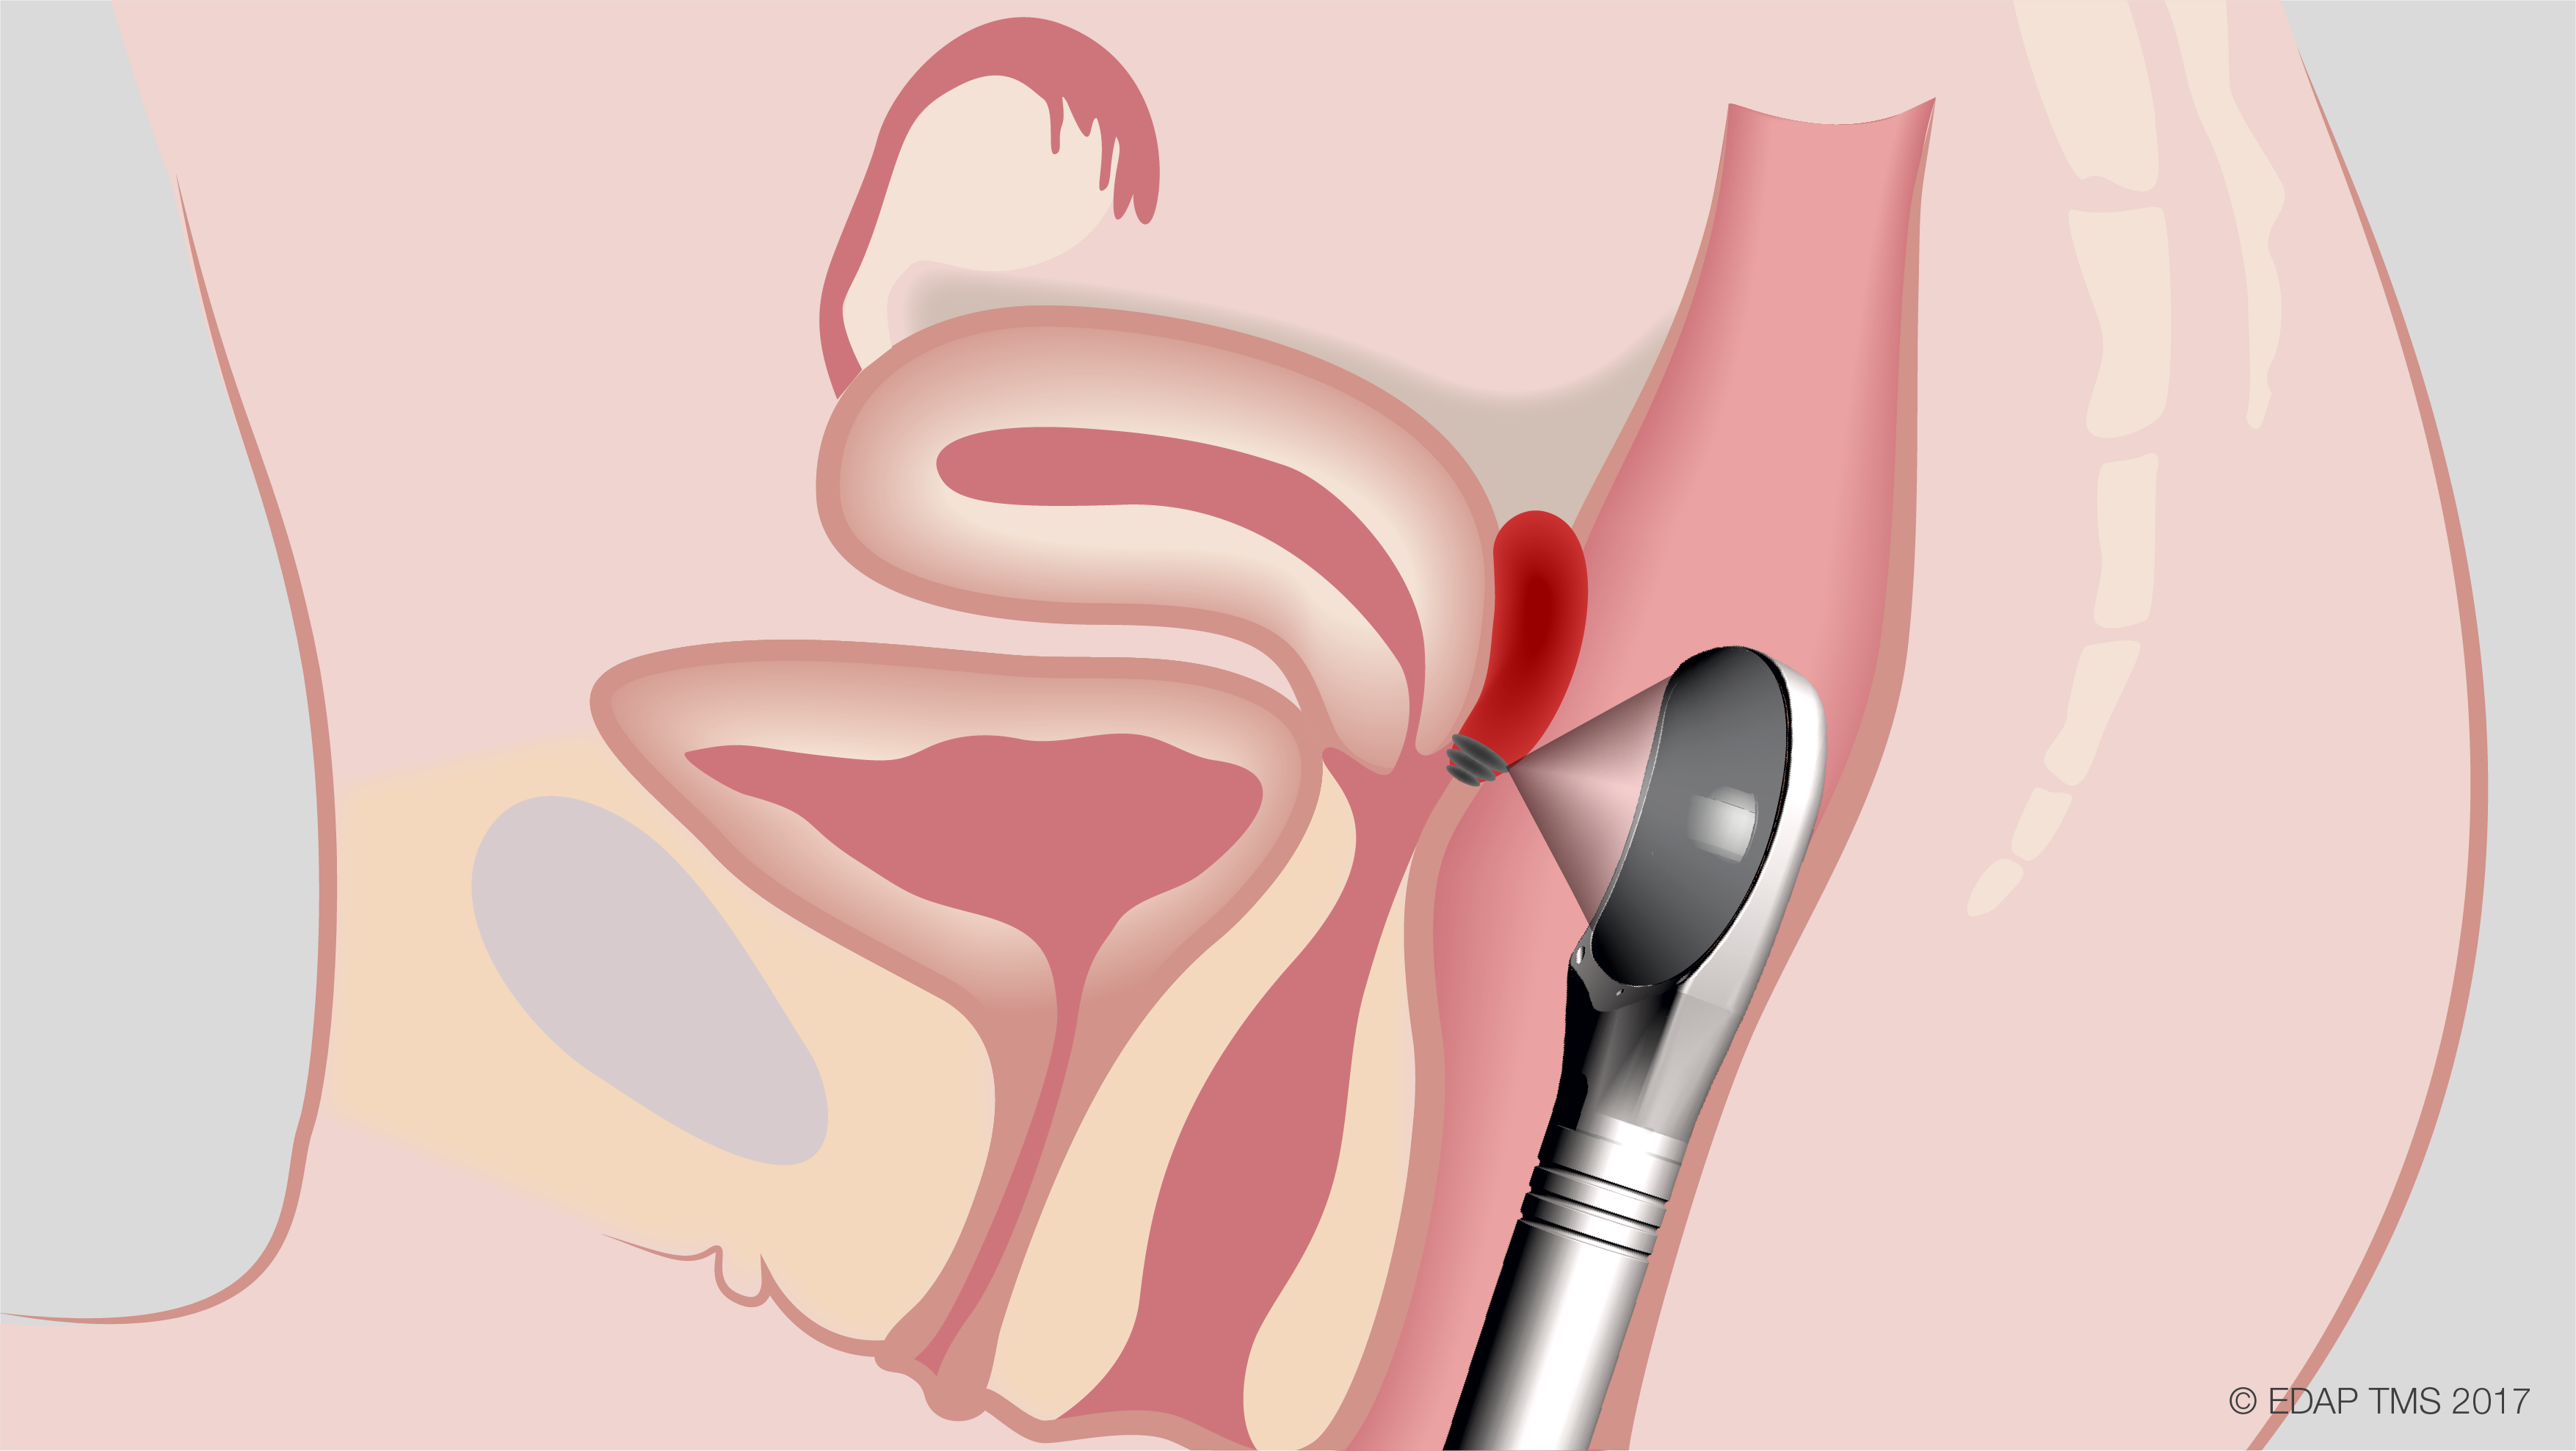 illustrations endometriose 03 provided by EDAP